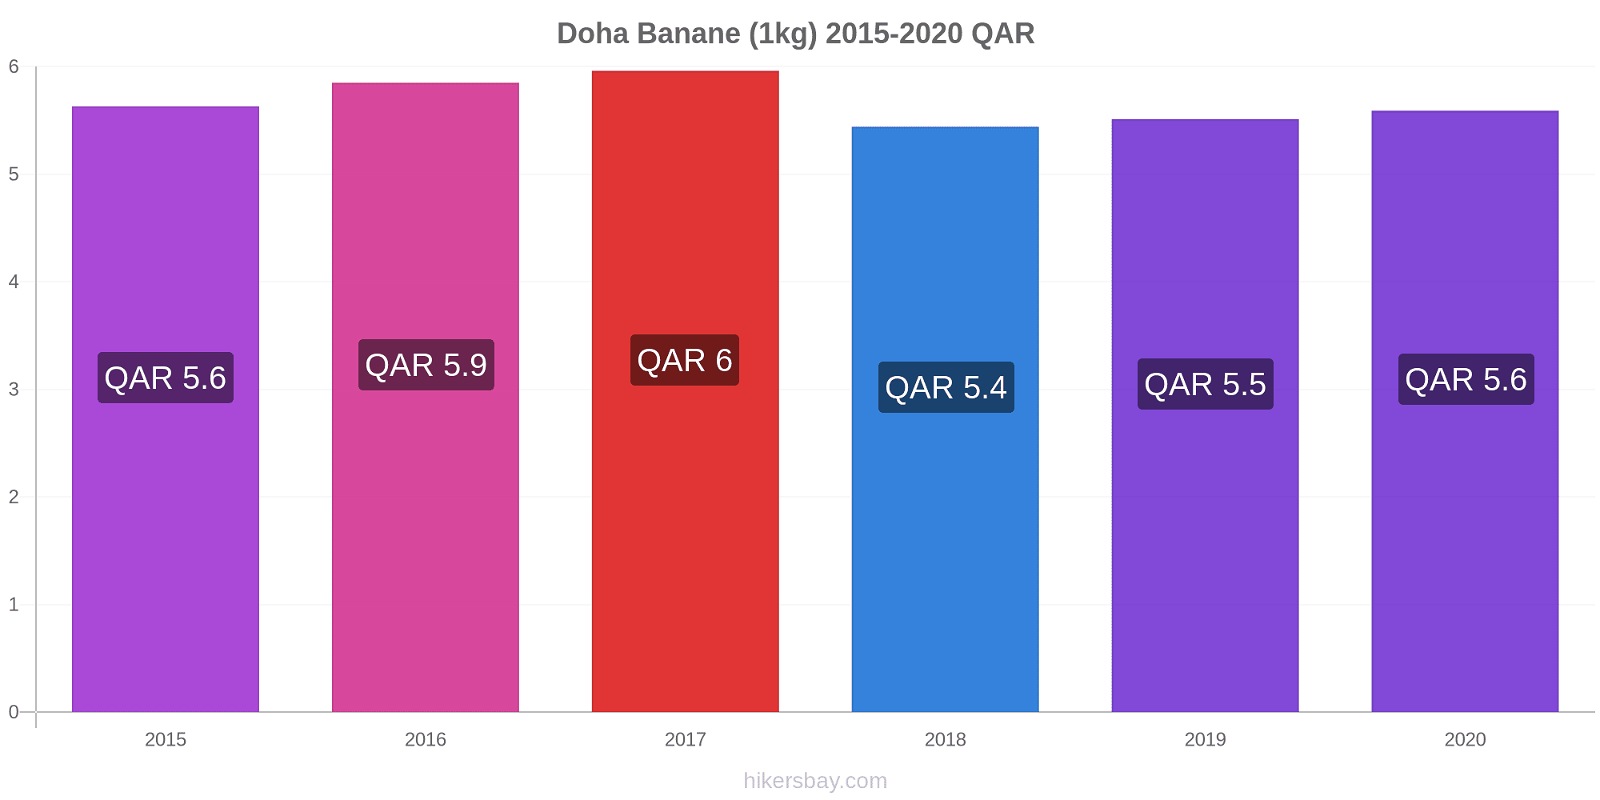 Doha variazioni di prezzo Banana (1kg) hikersbay.com